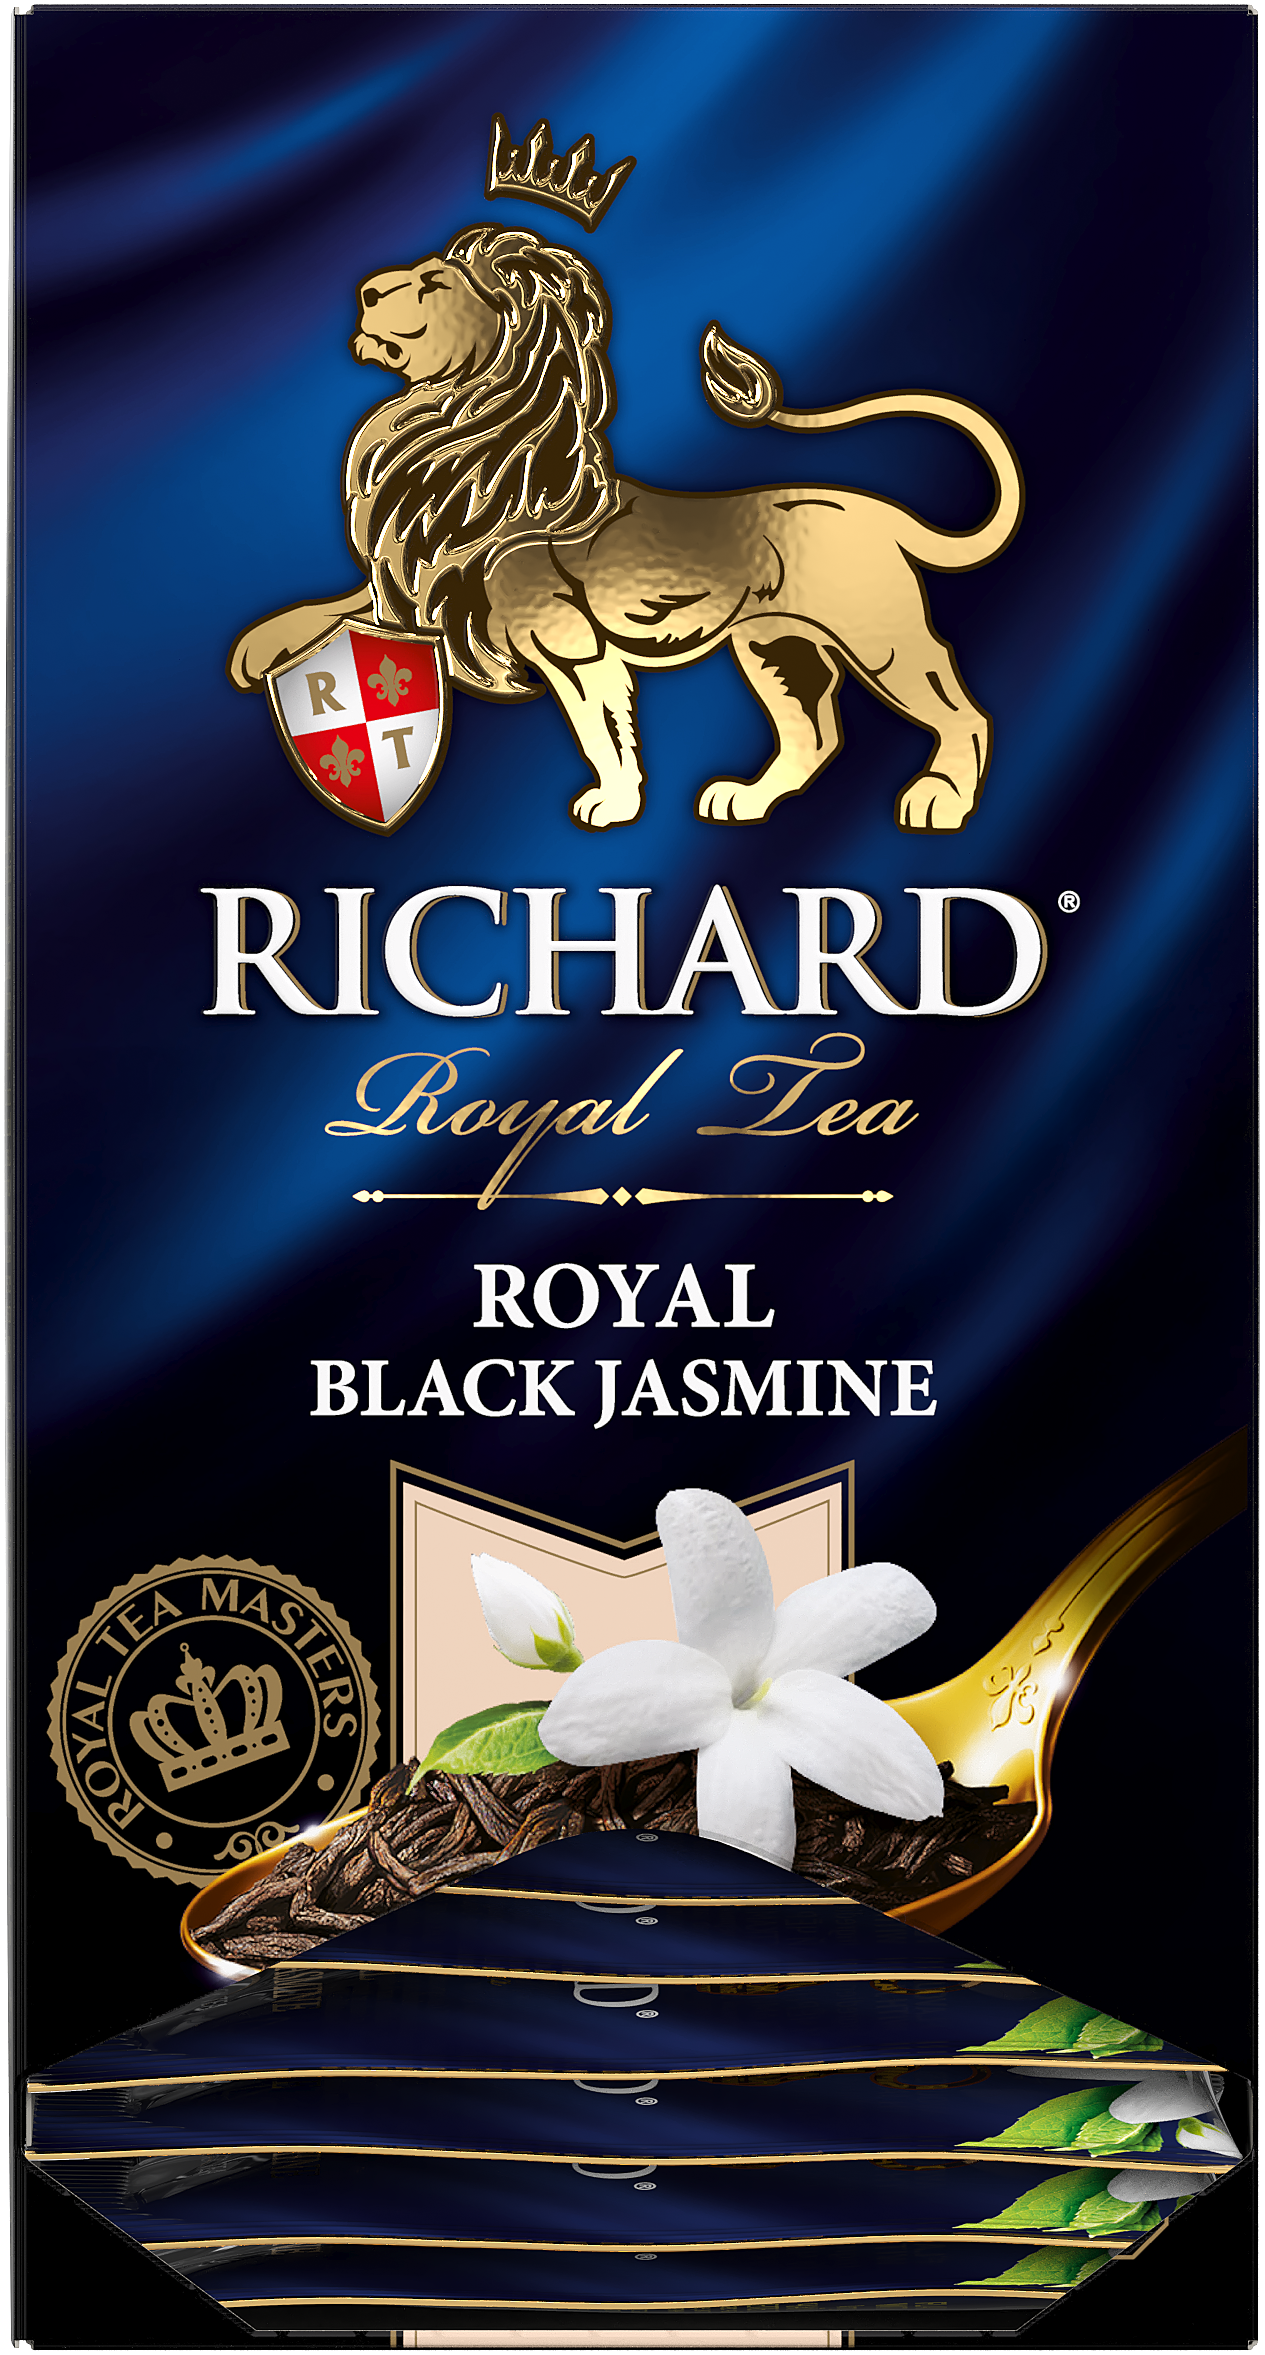 Richard "Royal Black Jasmine" black tea flavored, 25 sachet, 45 g